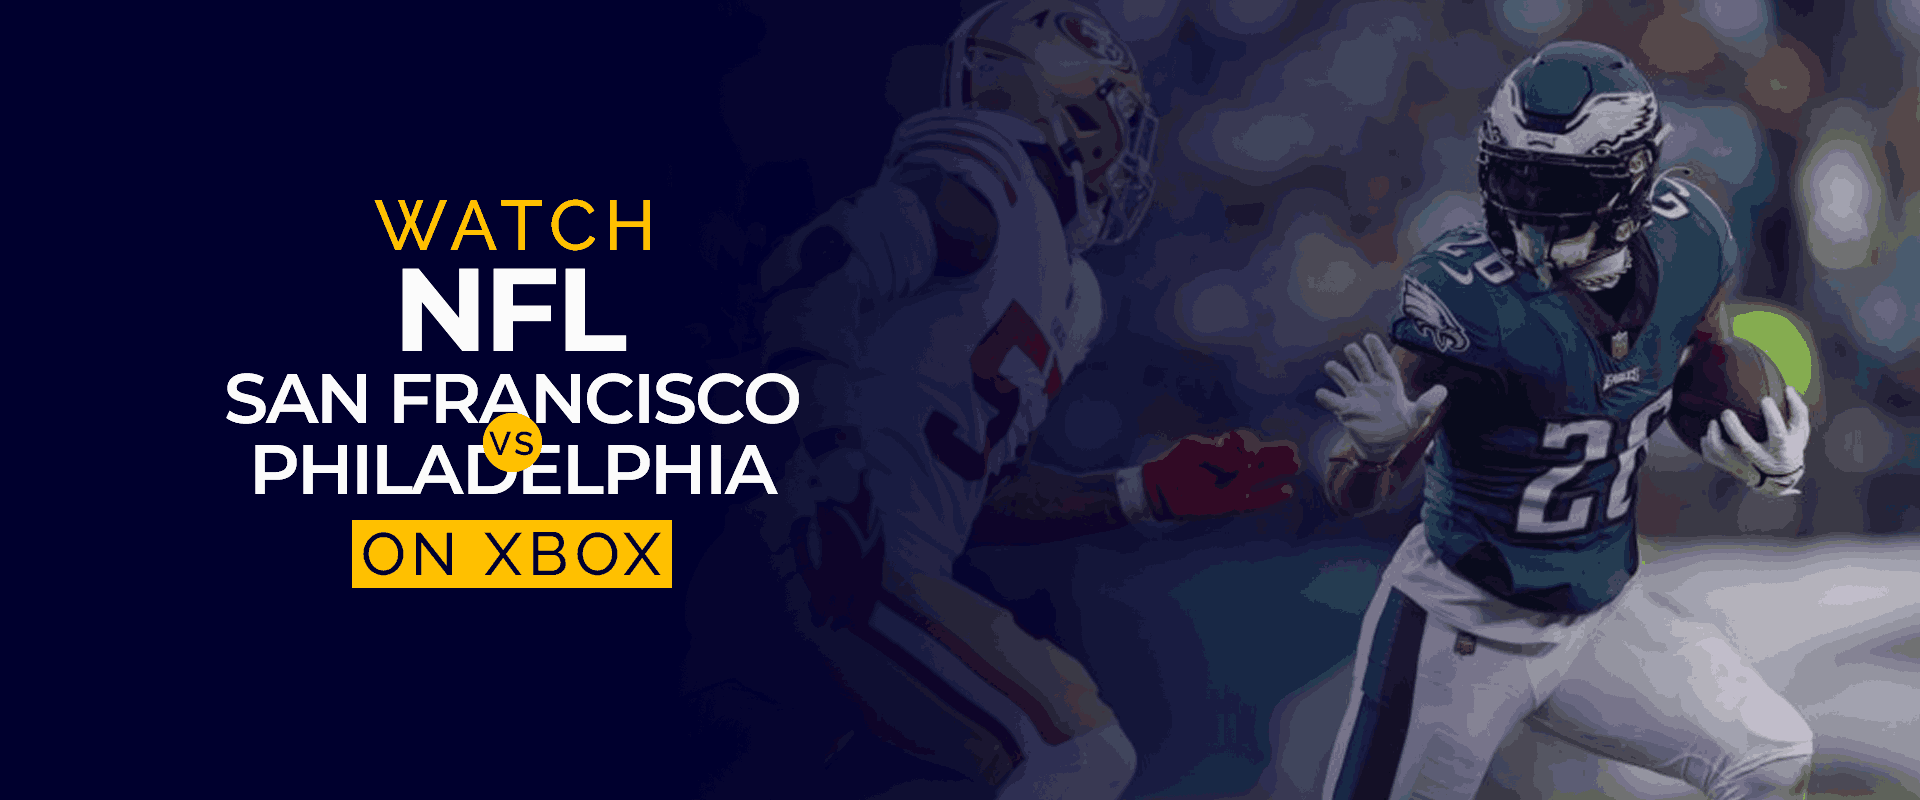 NFL San Francisco Vs Philadelphia را در Xbox تماشا کنید